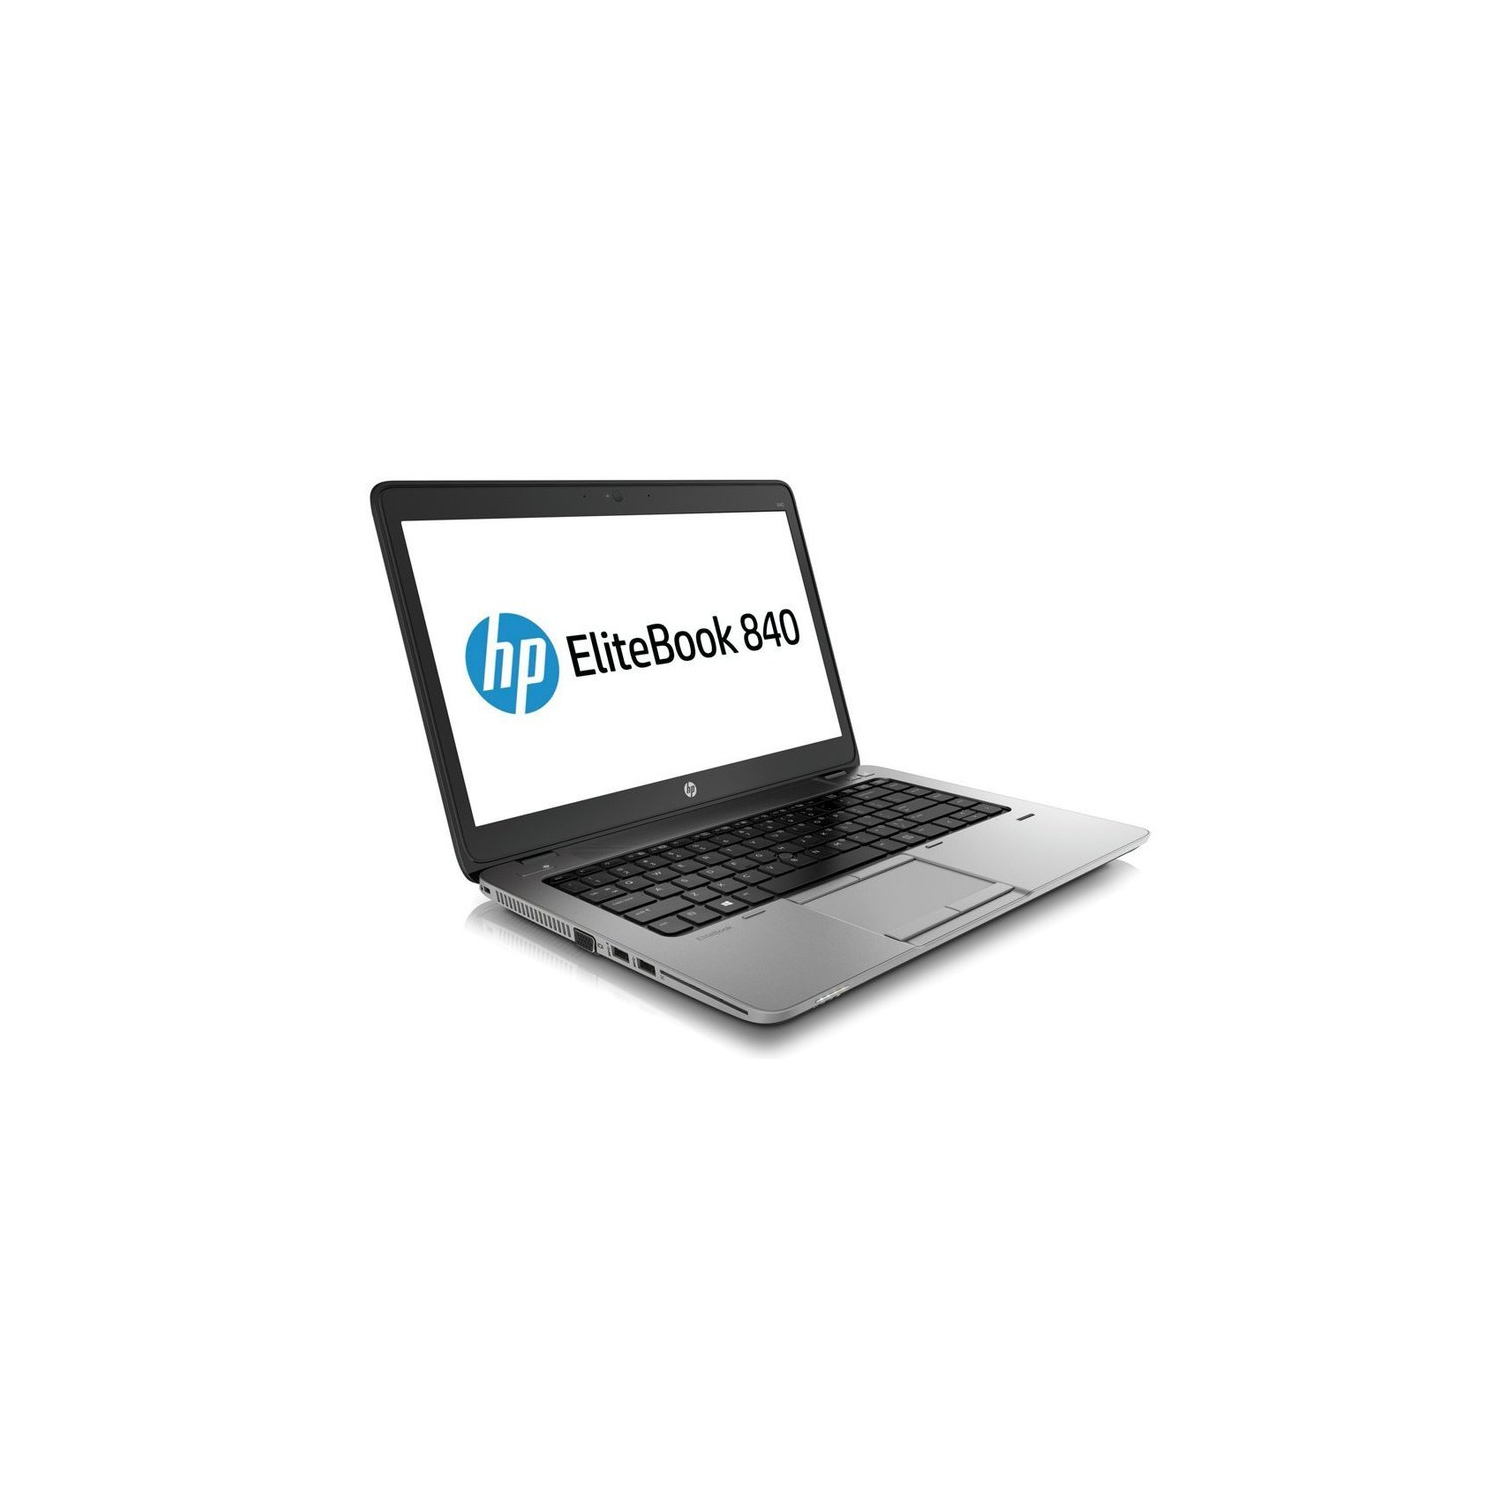 HP EliteBook 840 14" G1 Ultrabook Laptop - Intel Core i5-4300u, 8GB RAM, 320GB HDD, Win 10 Pro - Certified Refurbished